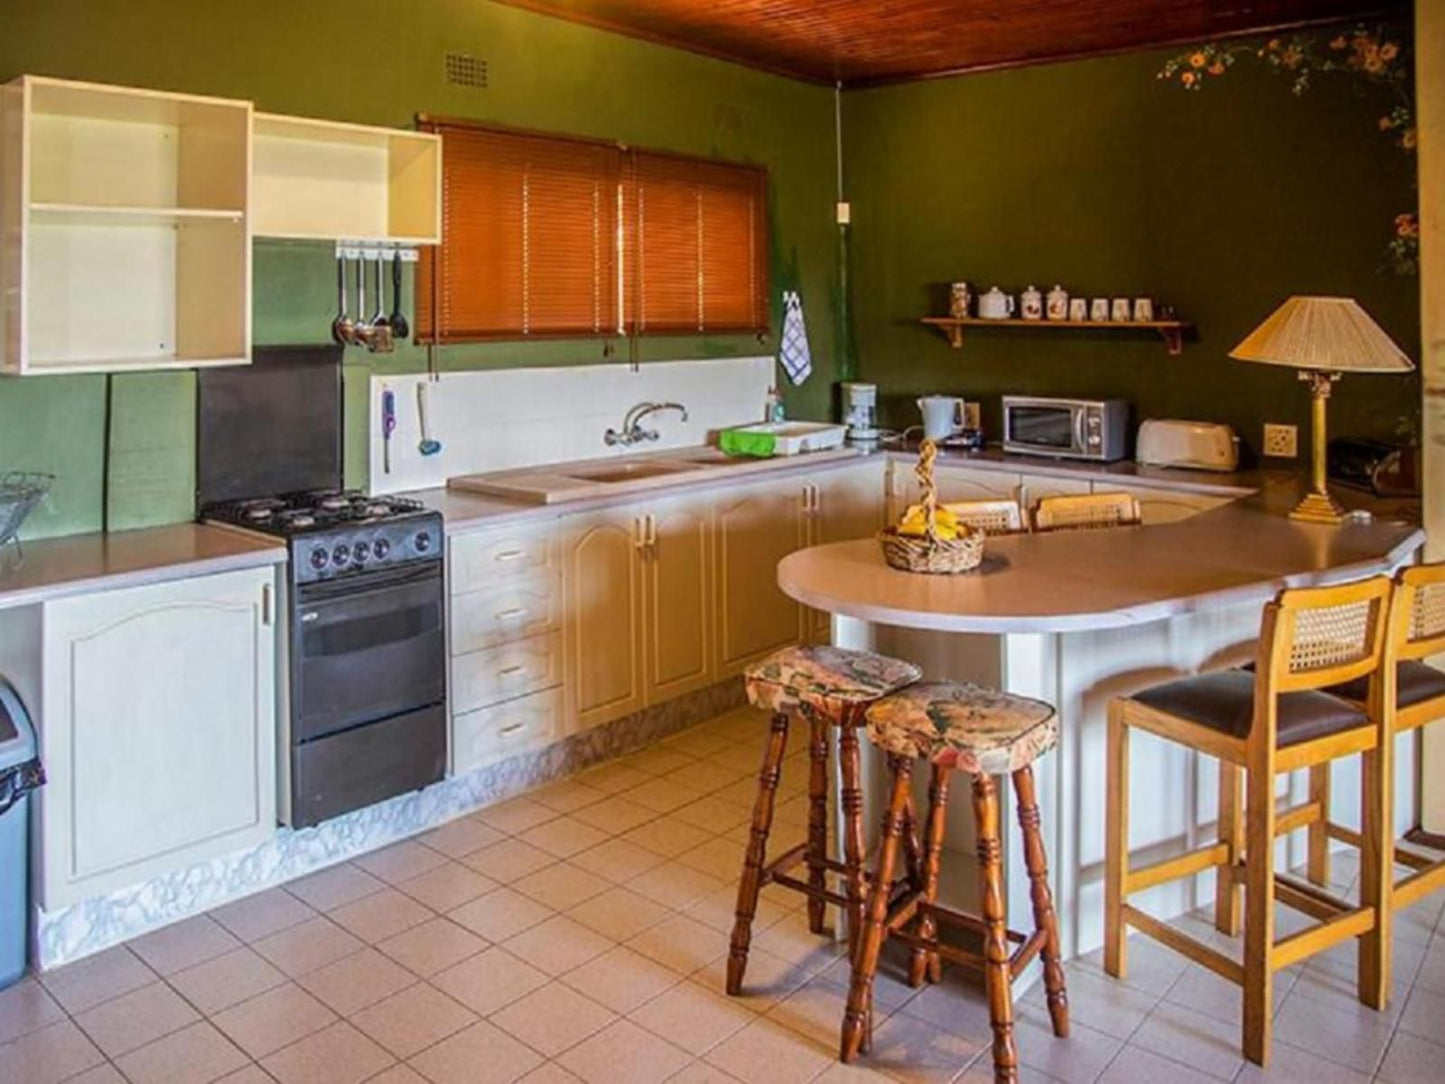 Haus Kopatsch Kiepersol Mpumalanga South Africa Kitchen